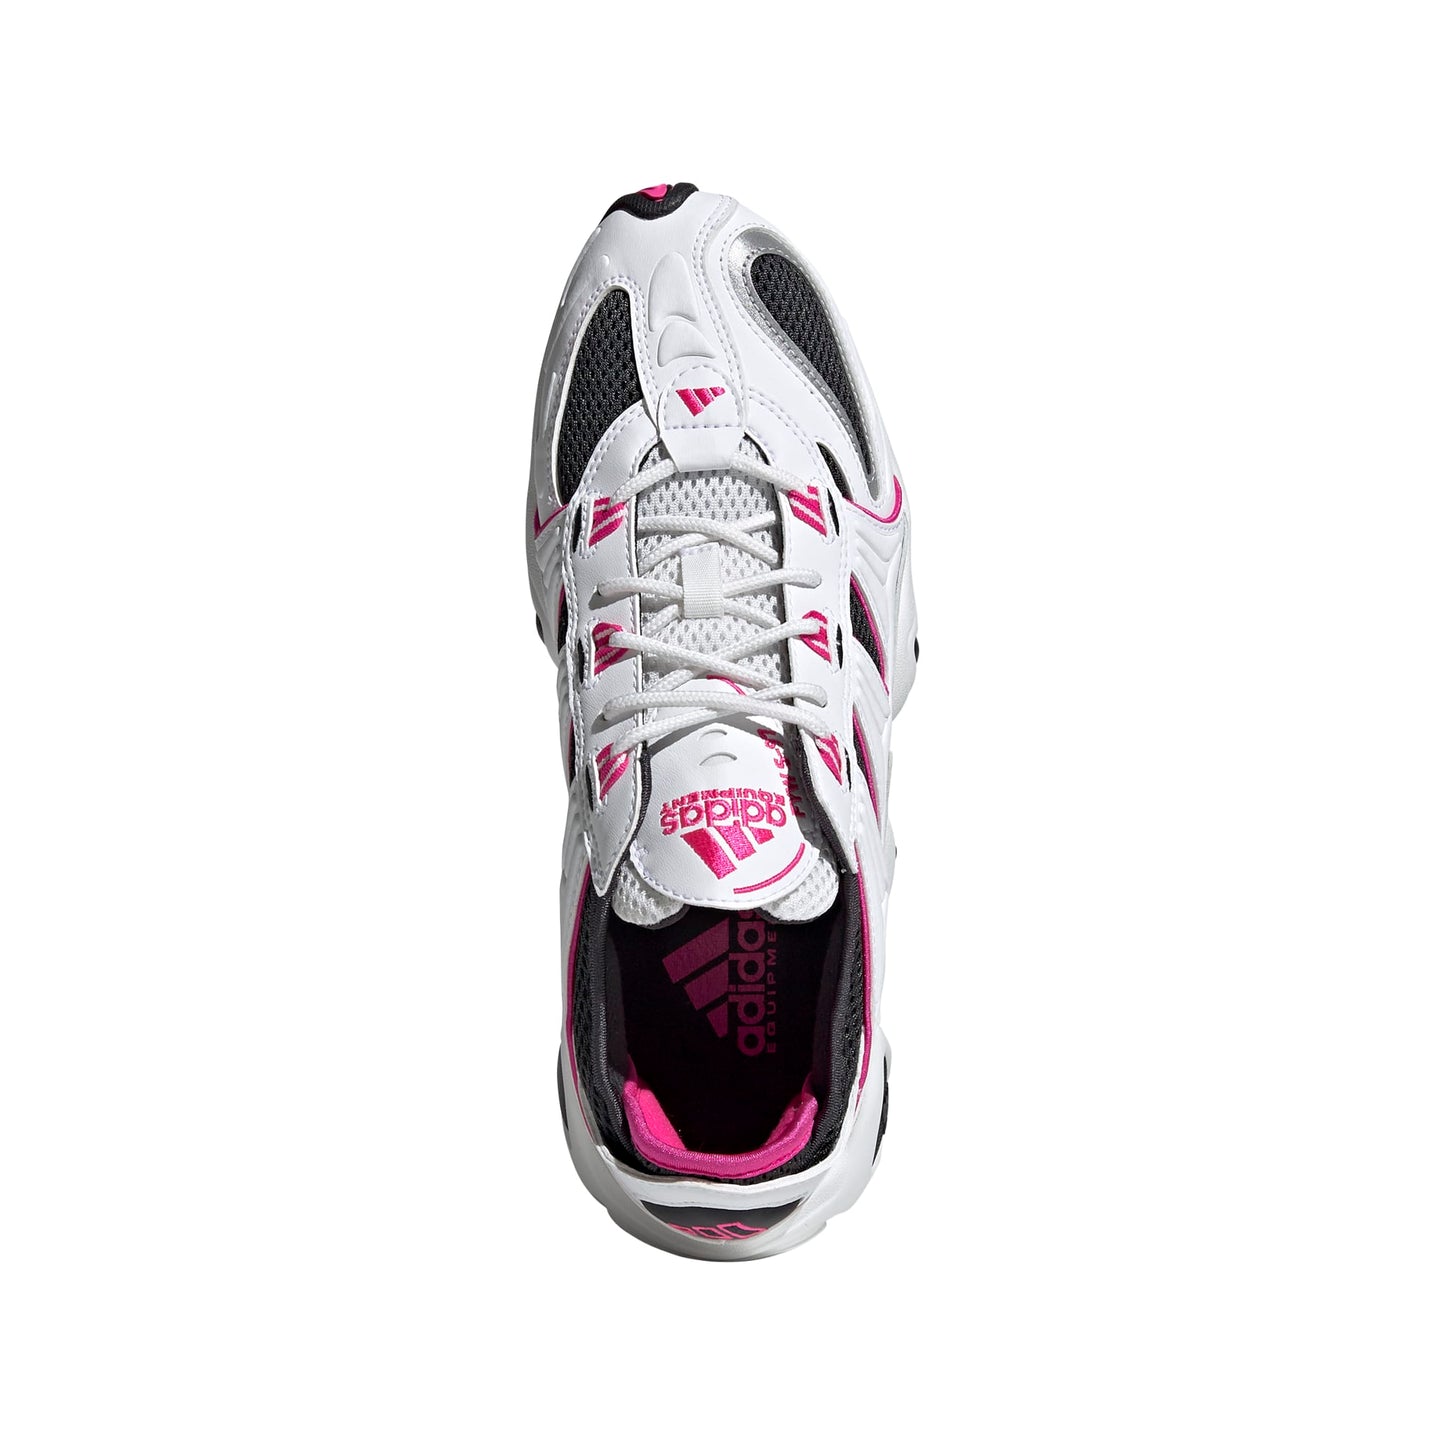 Adidas FYW S-97 "Crystal White Shock Pink"